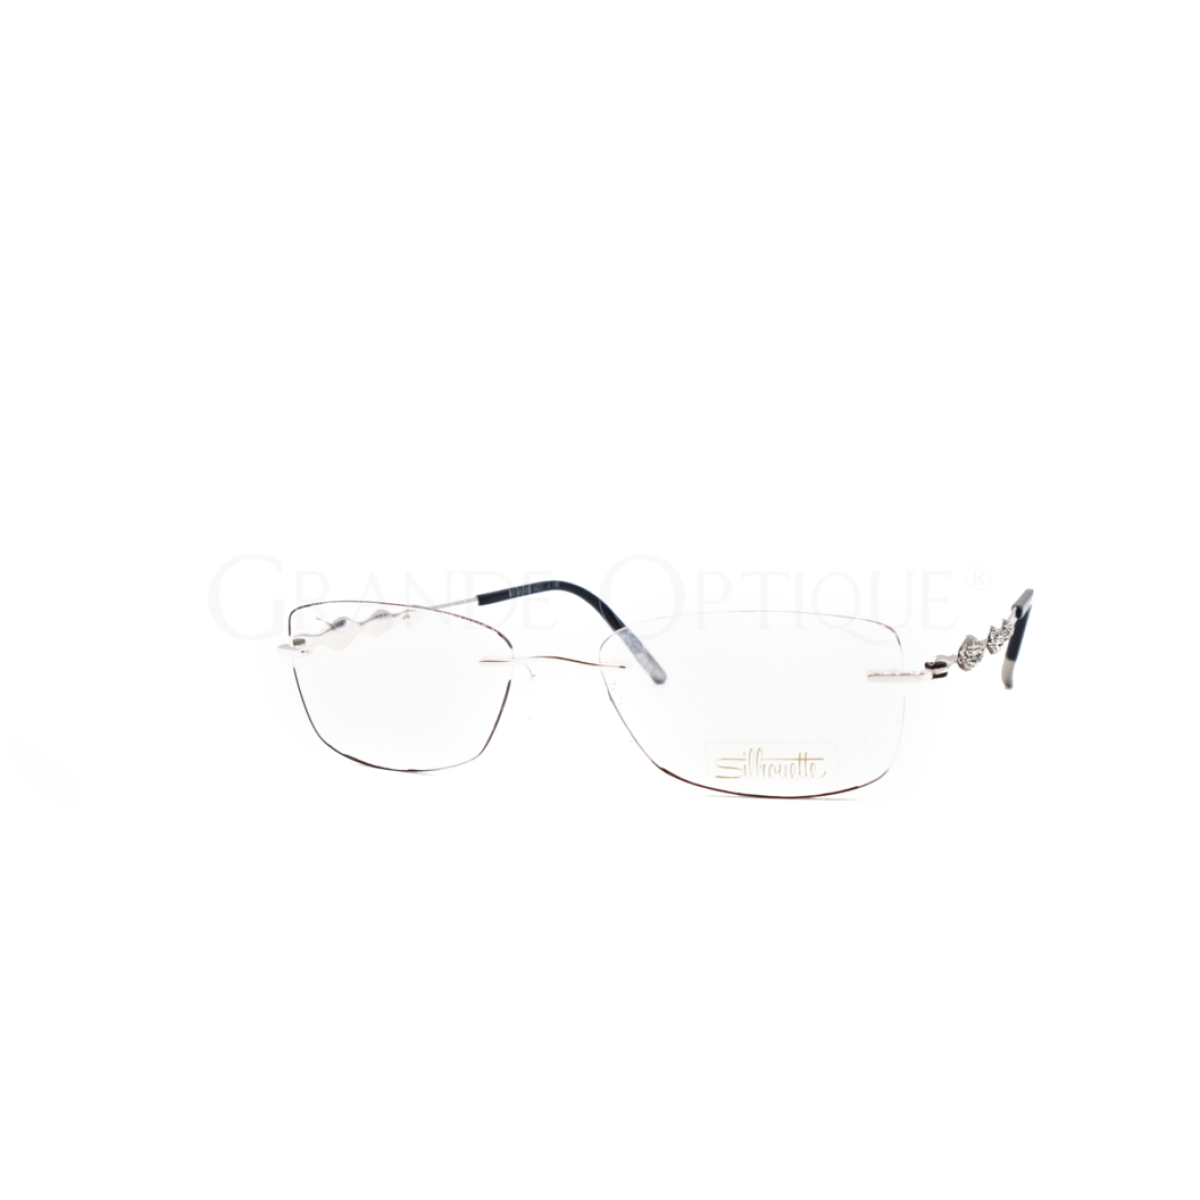 Setting birthday operation Rame de ochelari Silhouette 5526 GL 7000 placate cu Aur 23k